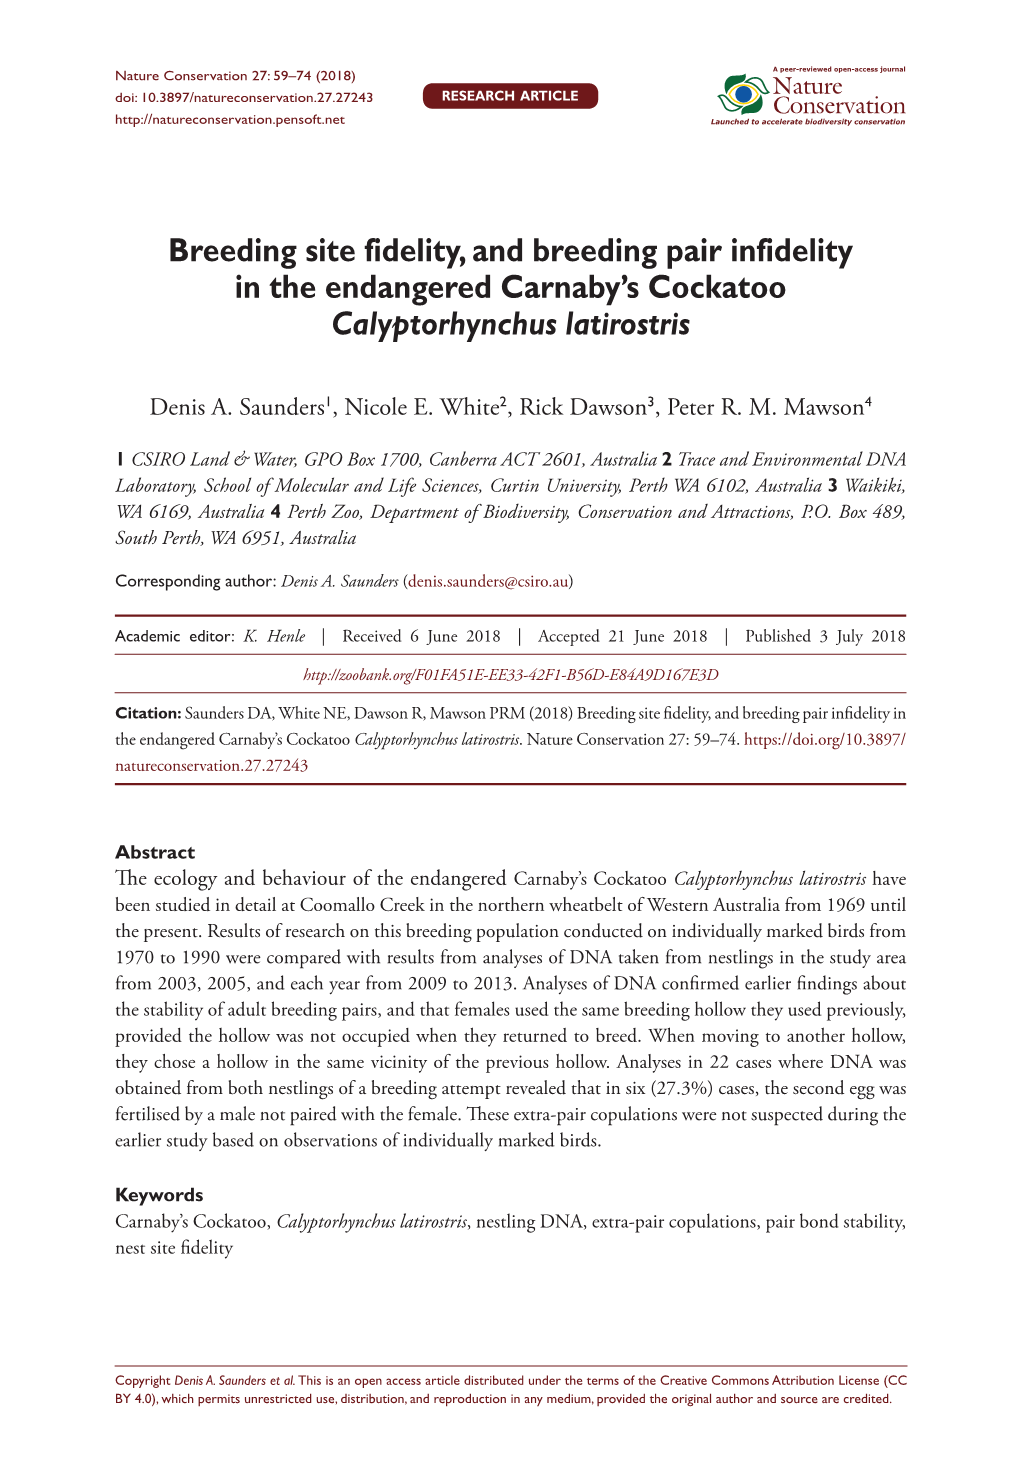 Breeding Site Fidelity, and Breeding Pair Infidelity in the Endangered Carnaby’S Cockatoo Calyptorhynchus Latirostris